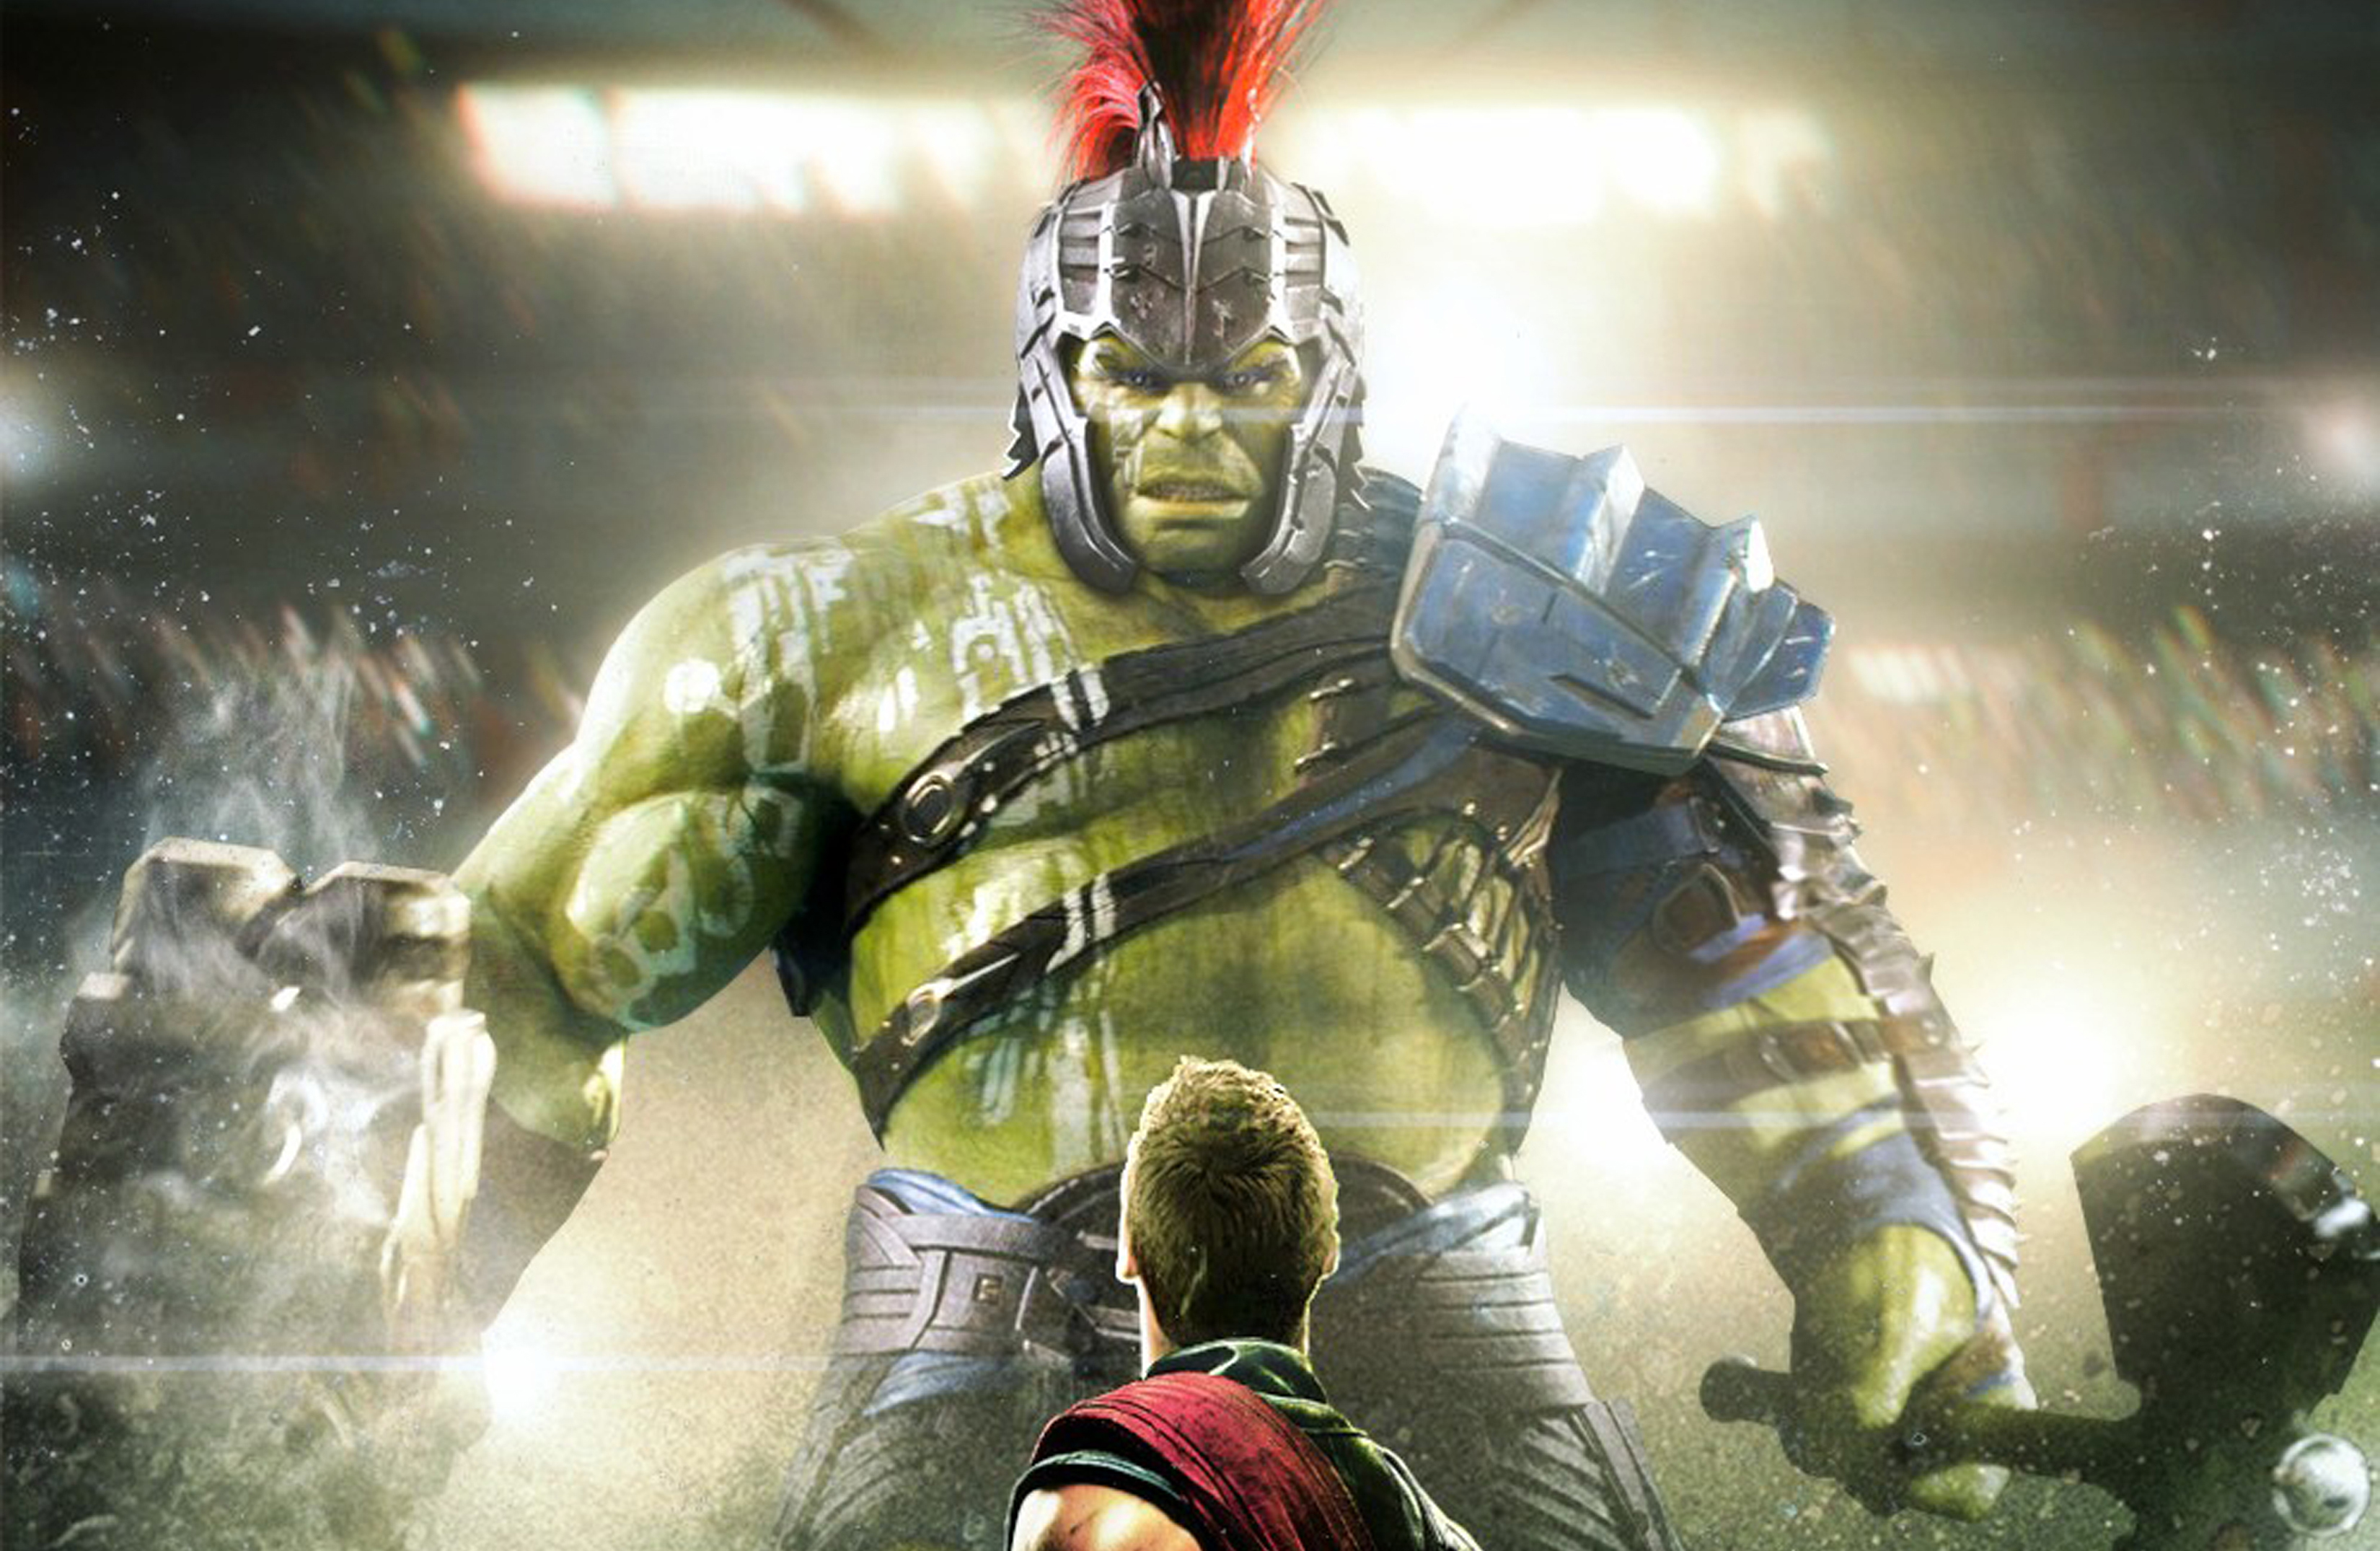 13+] Thor And Hulk Fight Wallpapers - WallpaperSafari